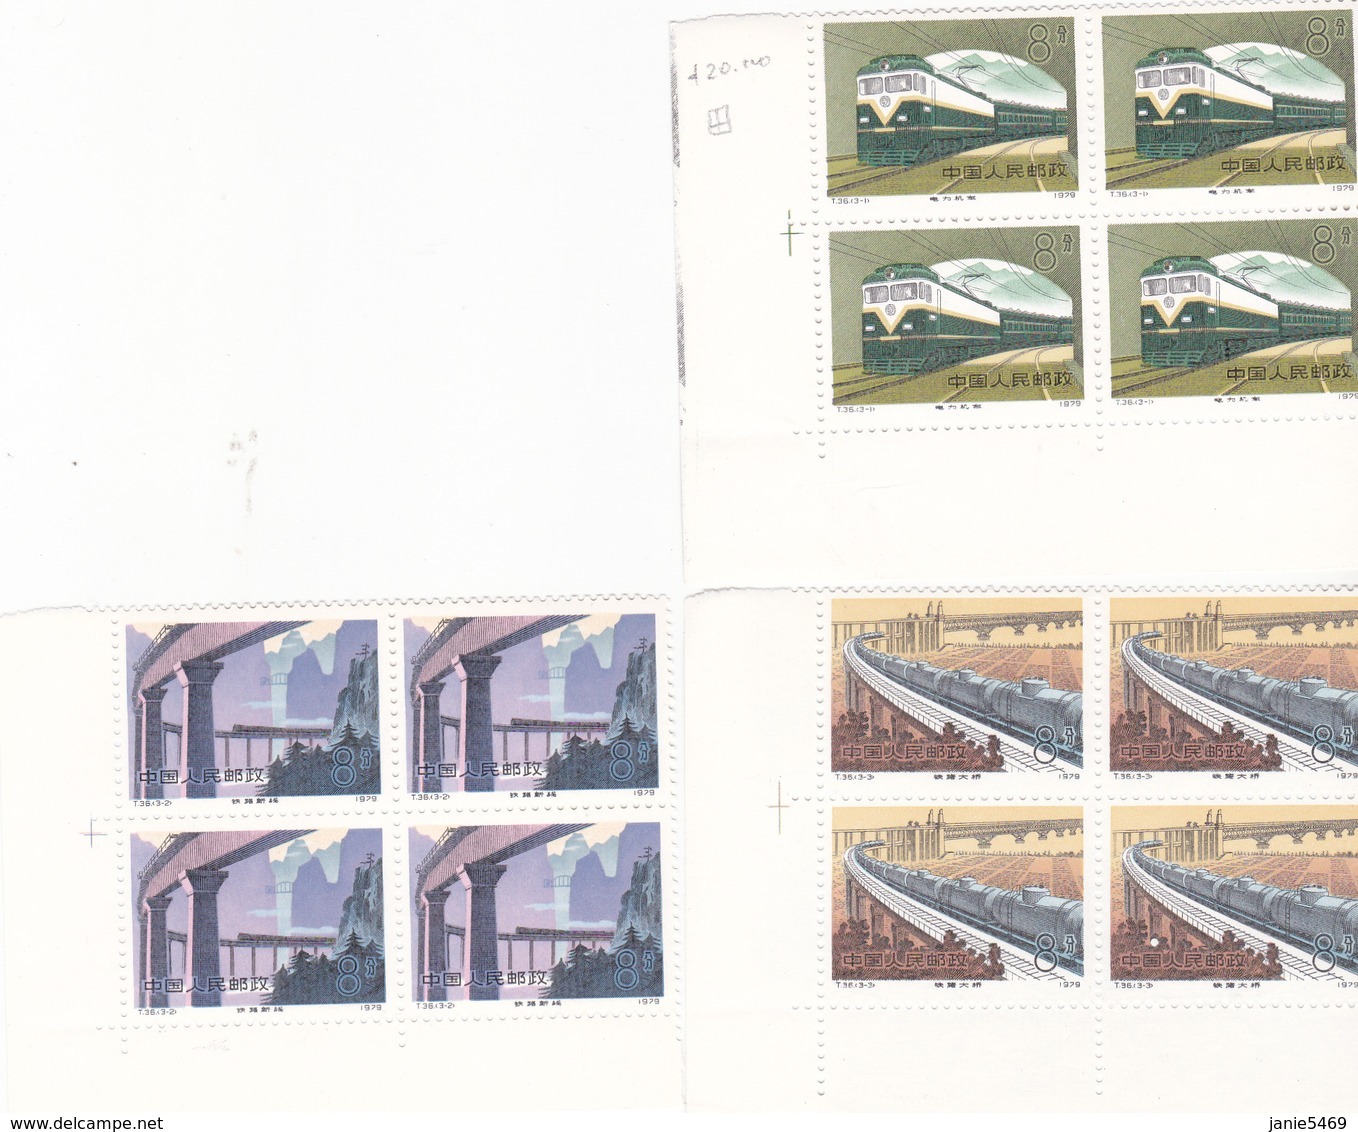 China People's Republic Scott 1527-1529 1979 Railroad Block4 Mint Never Hinged - Unused Stamps